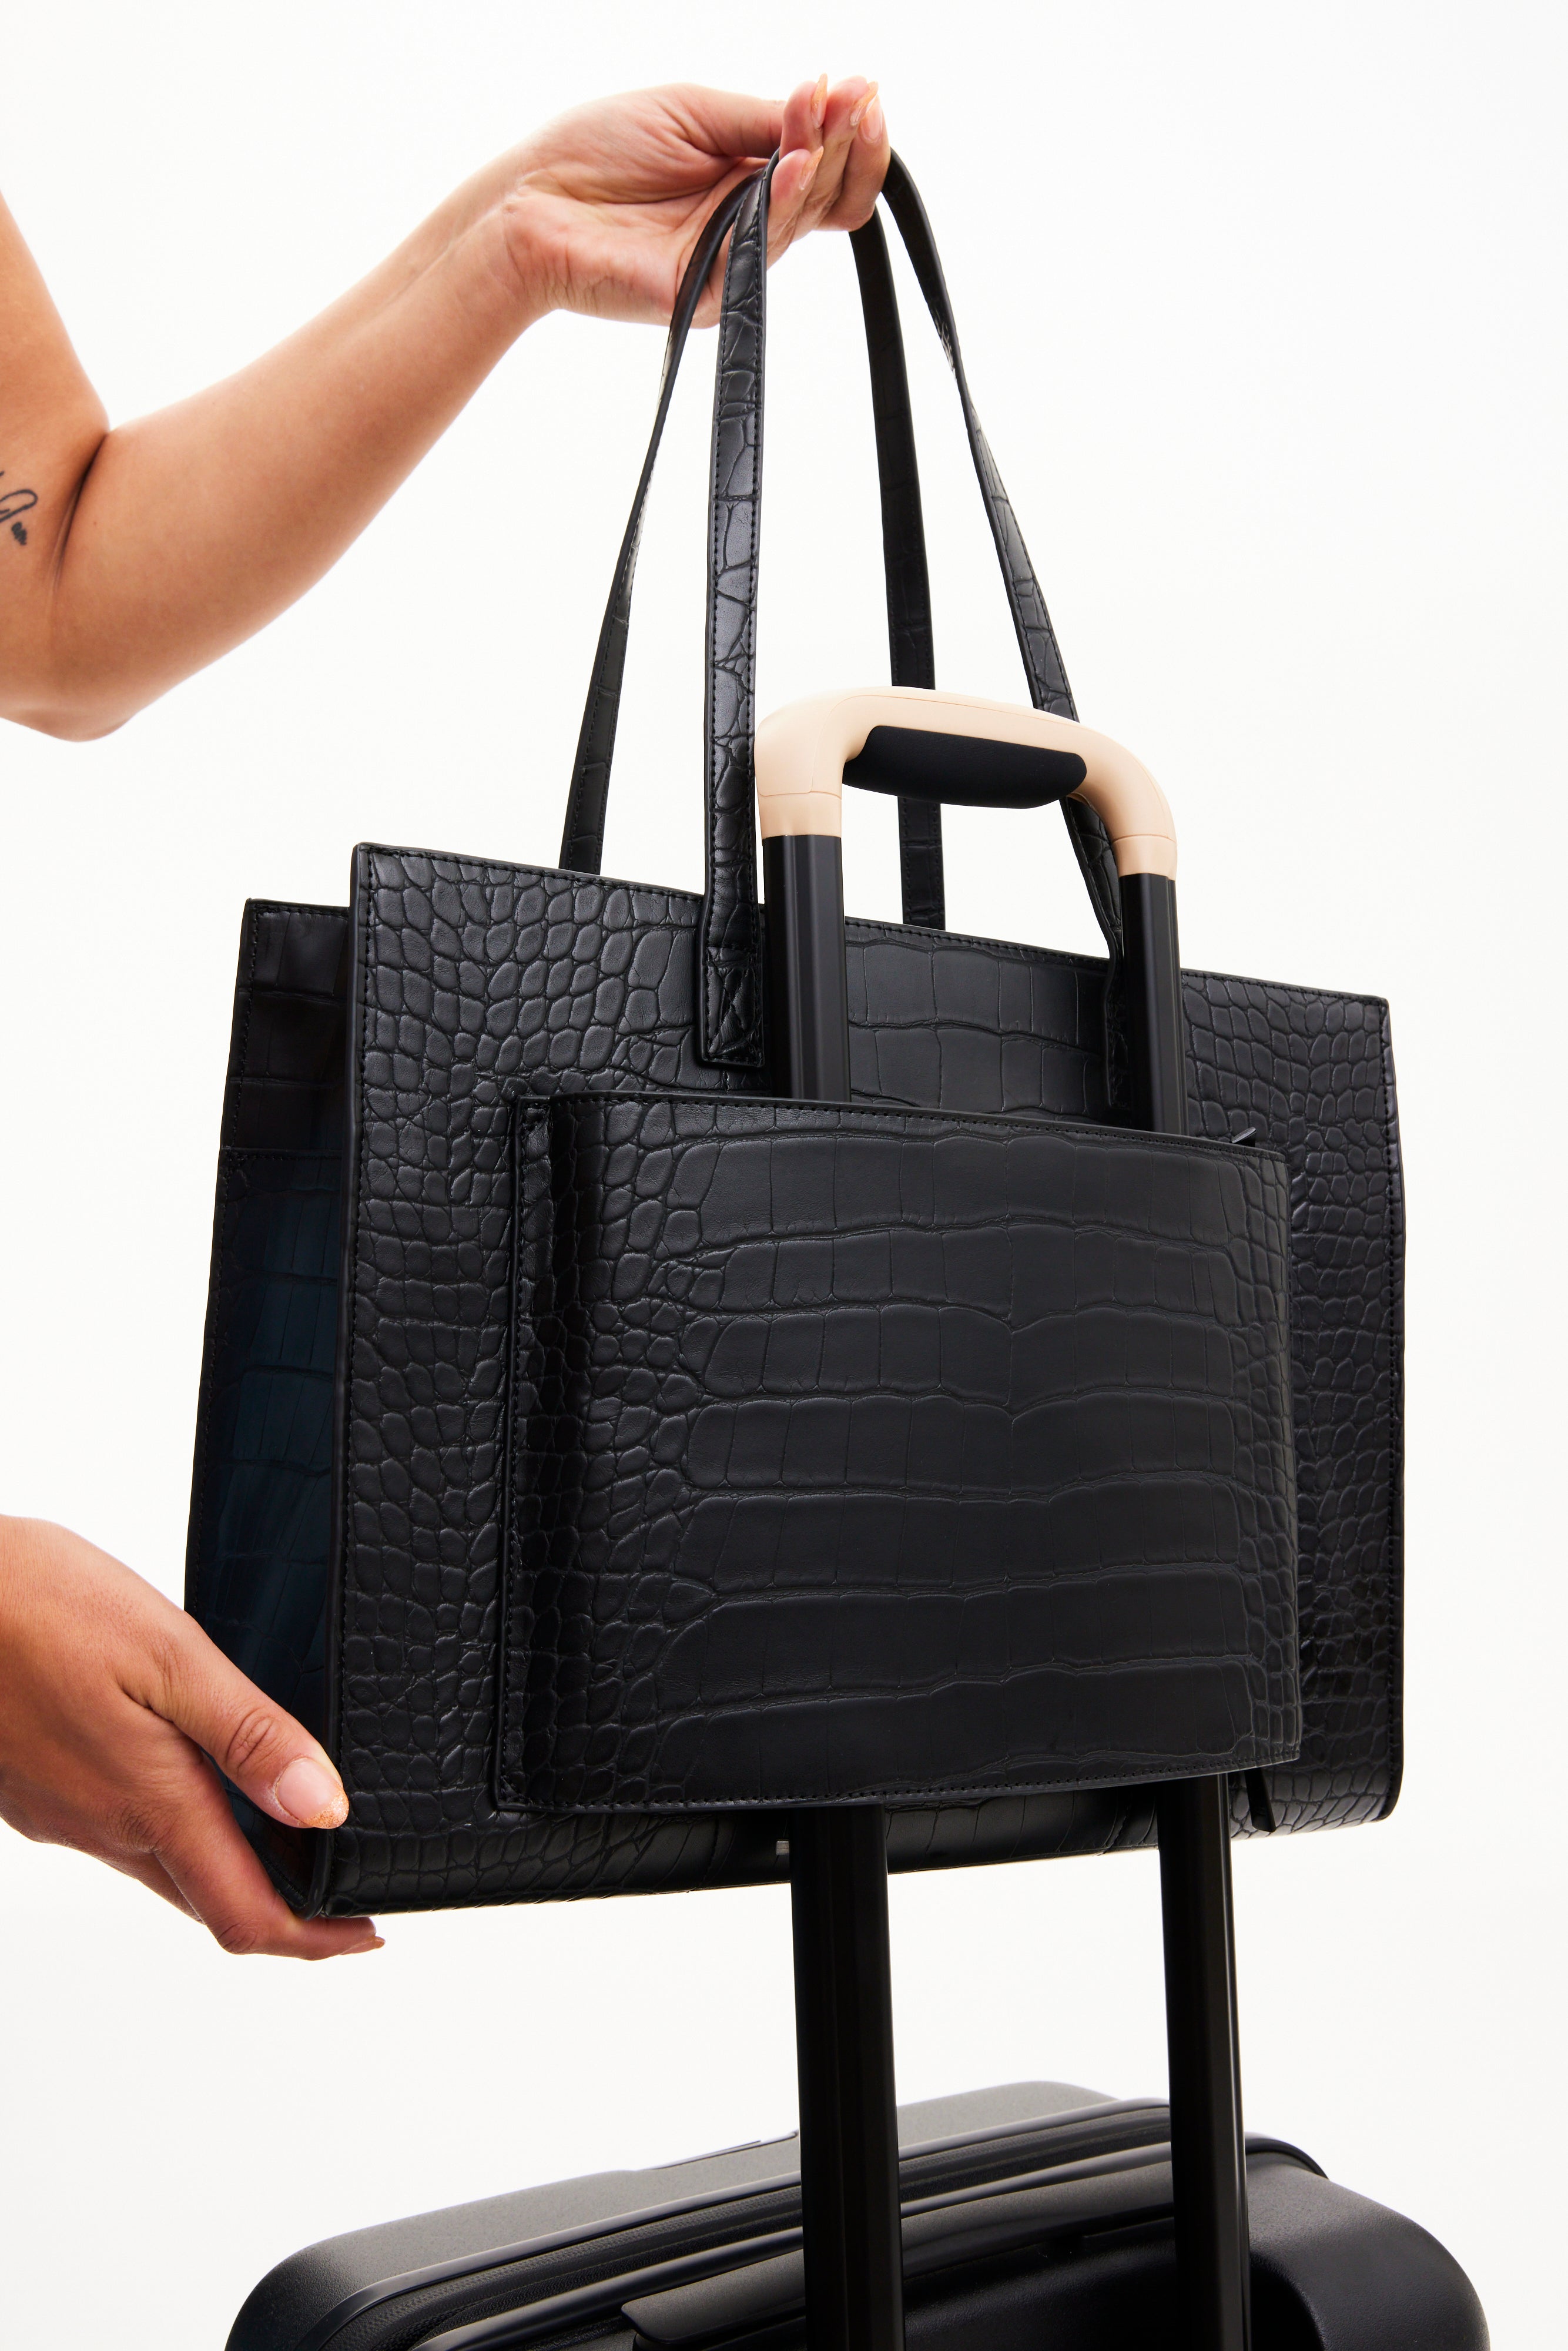 BÉIS 'The Work Tote' in Black Croc - Designer Laptop Tote Bag